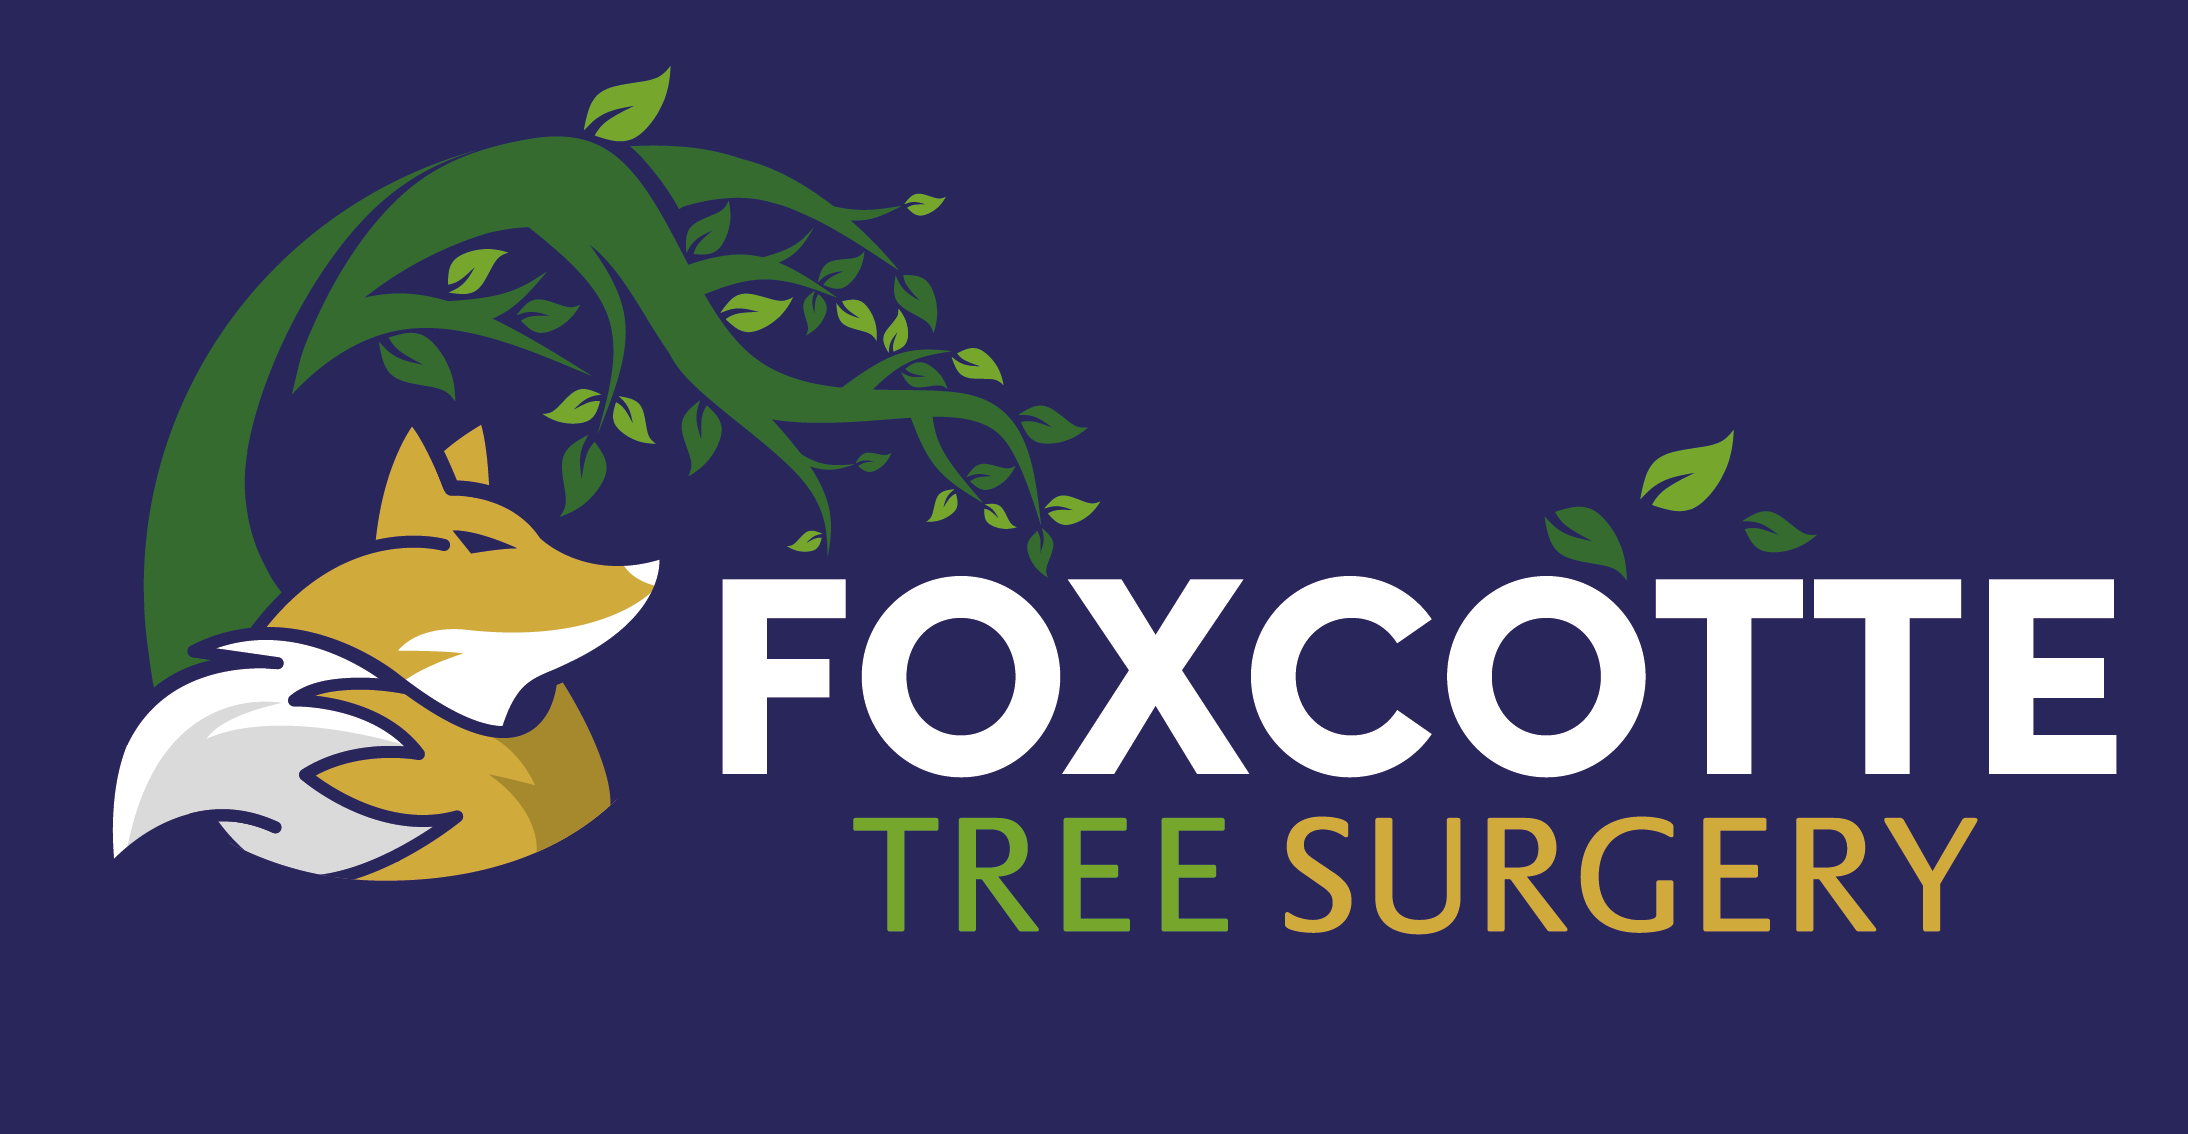 FOXCOTTE TREE SURGERY